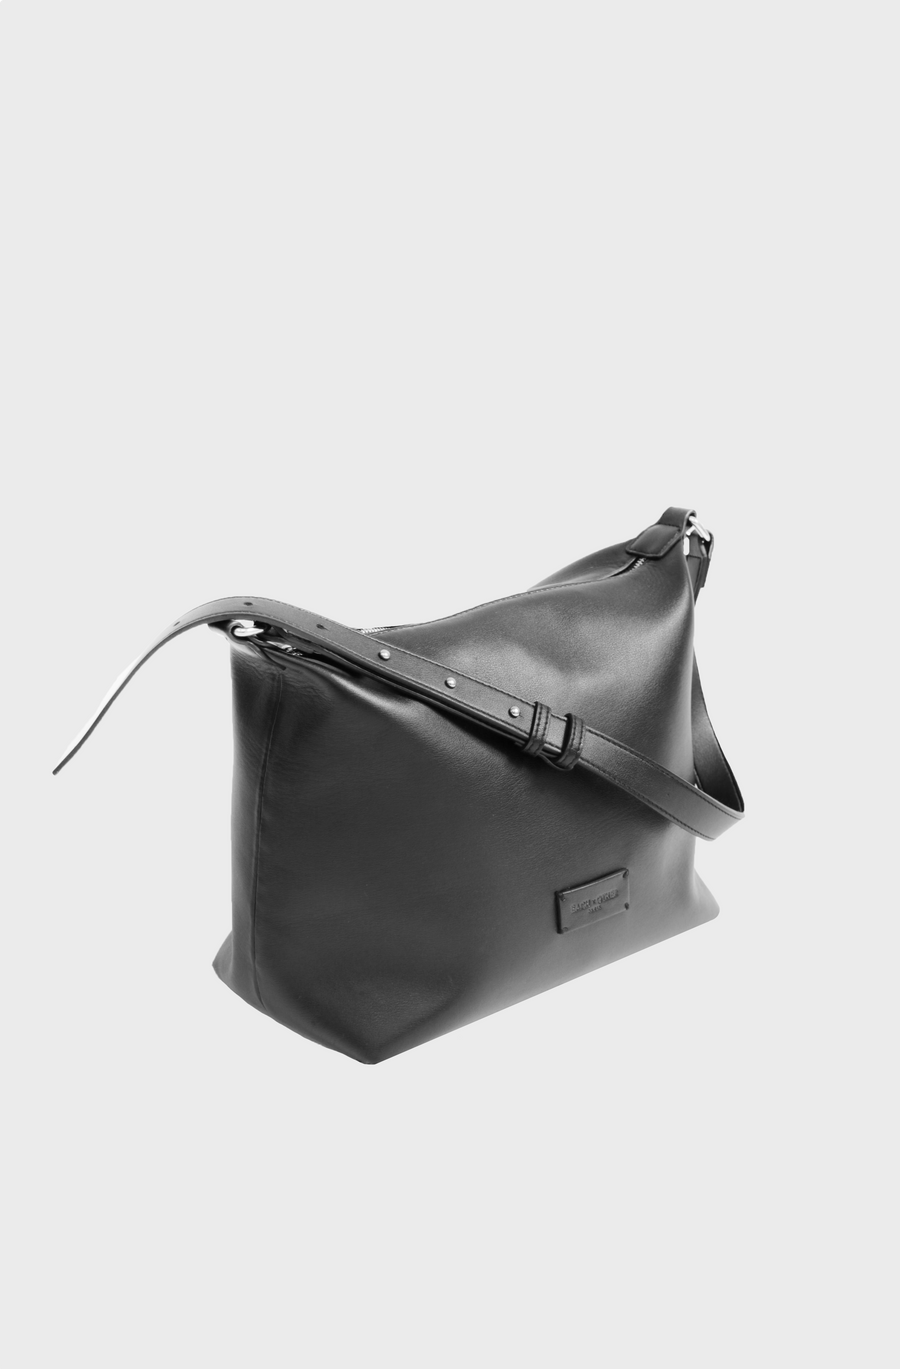 Each Other x Elizabeth Sulcer Soft Leather Large Hobo Bag